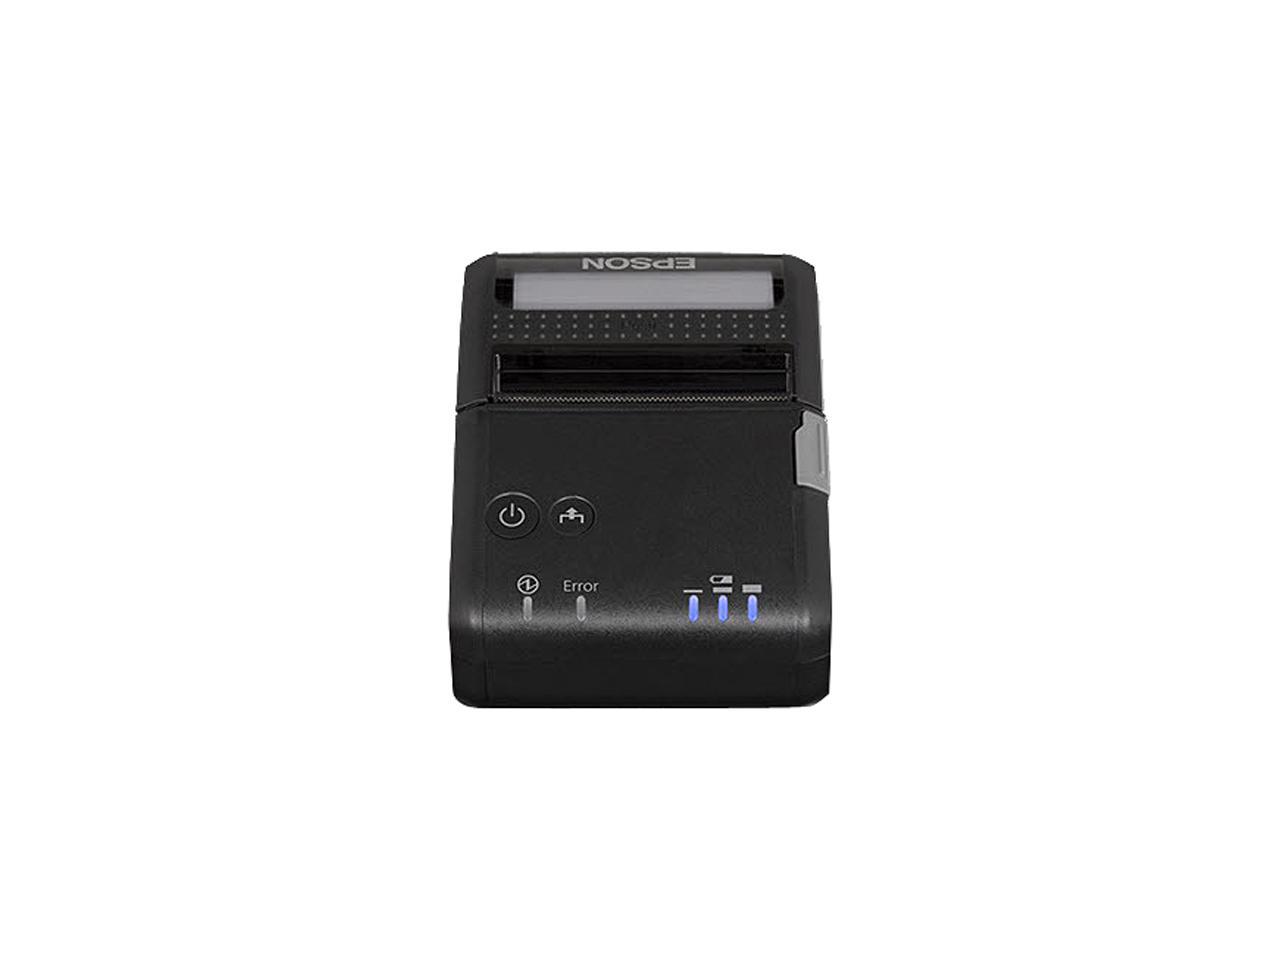 Epson TM-P20 Mobilink 2" Compact Mobile Bluetooth Receipt Printer, Black - C31CE14551